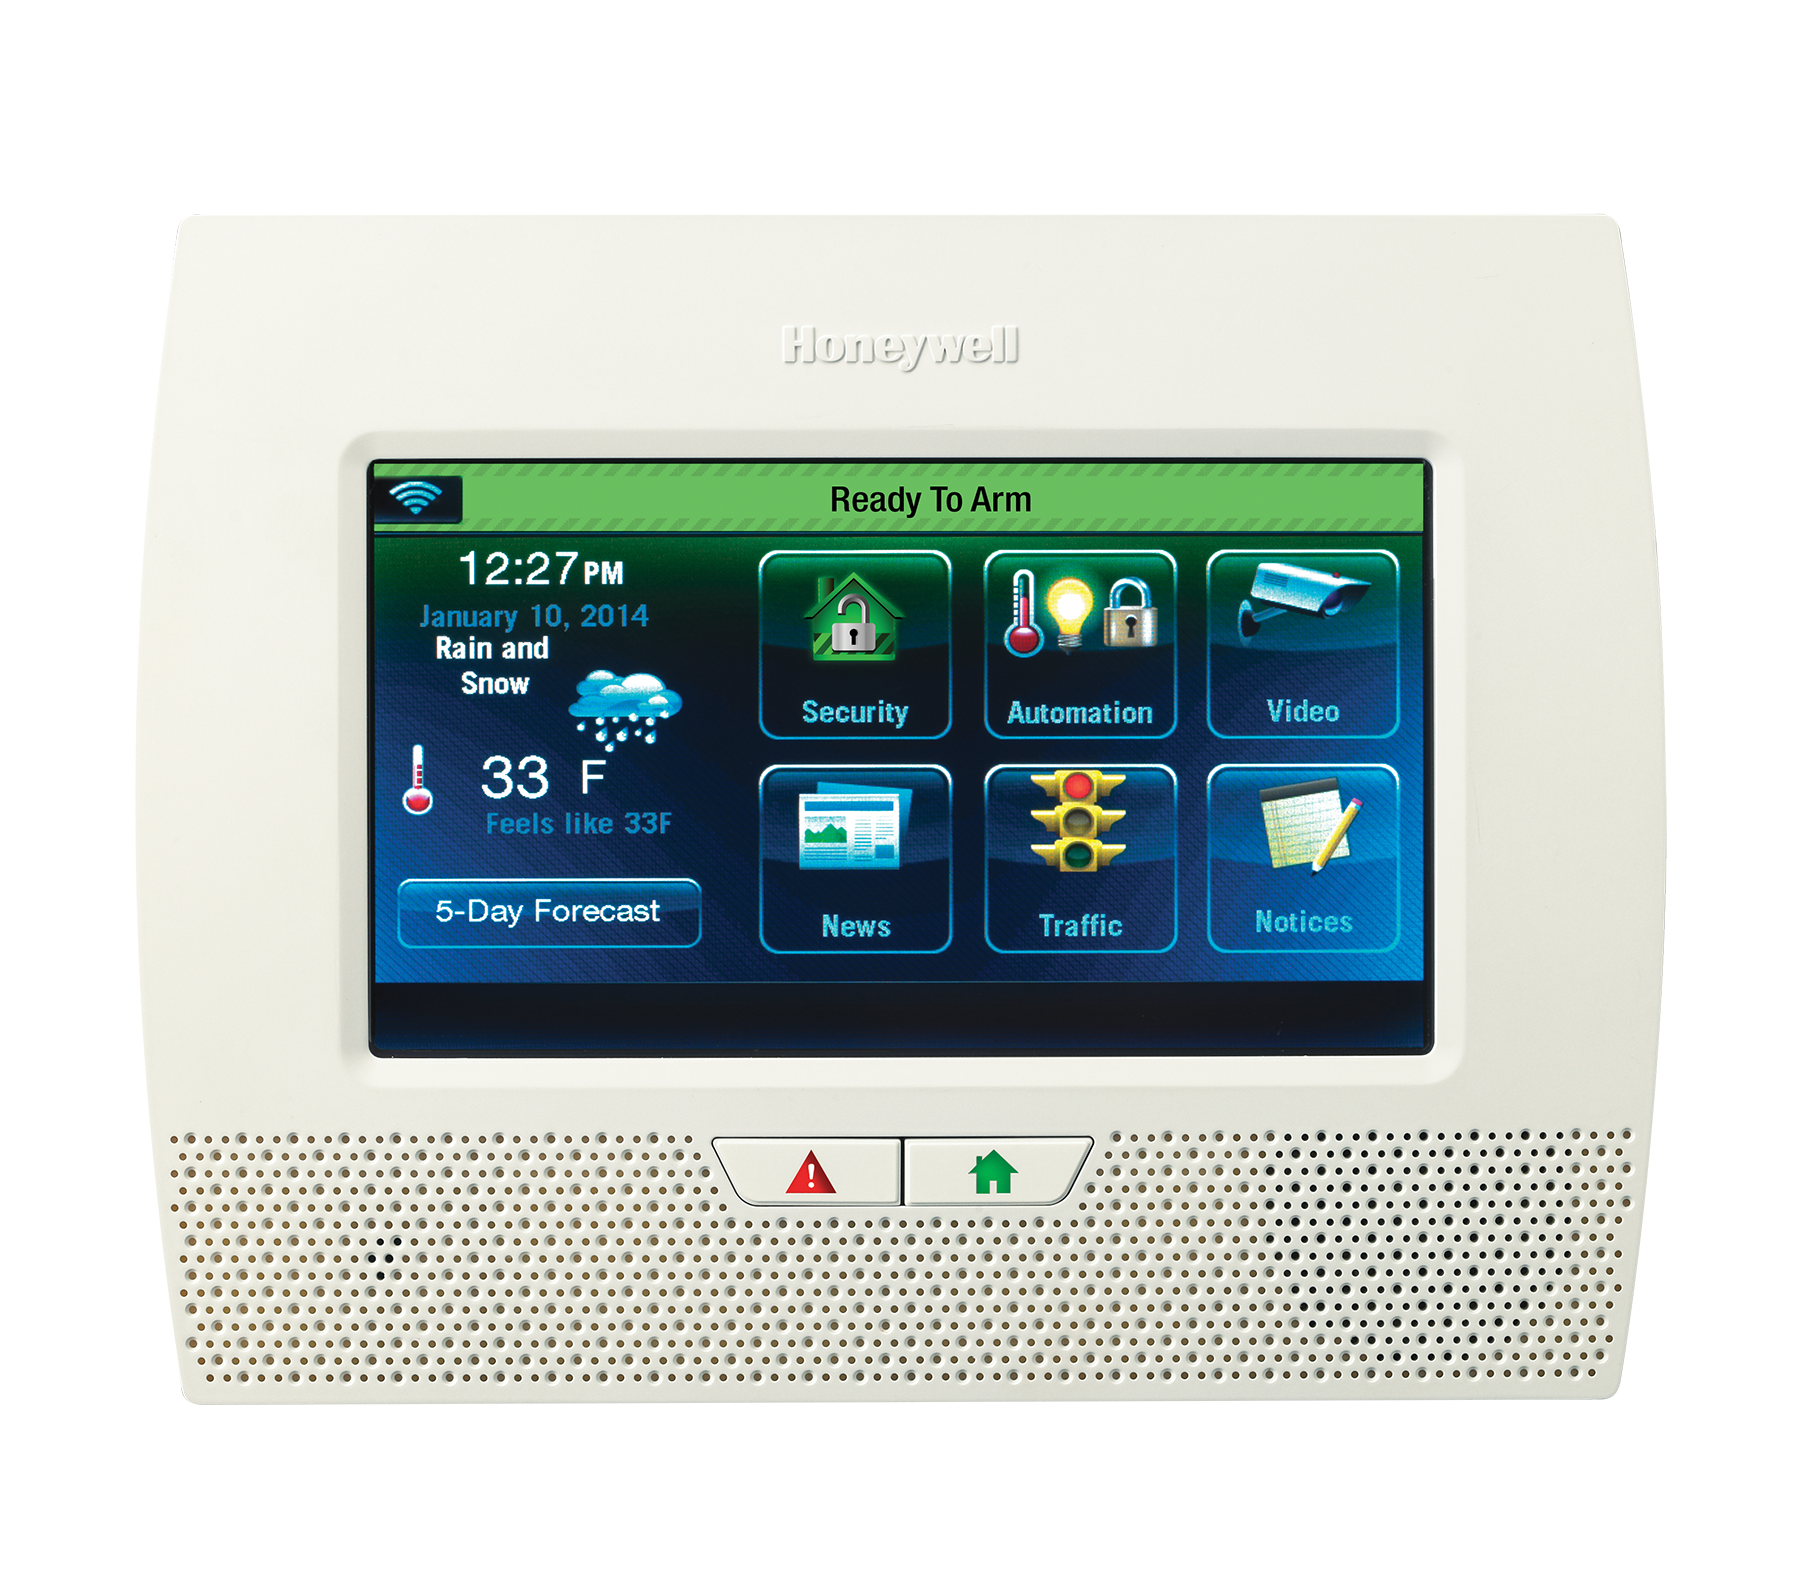 change code on honeywell alarm system